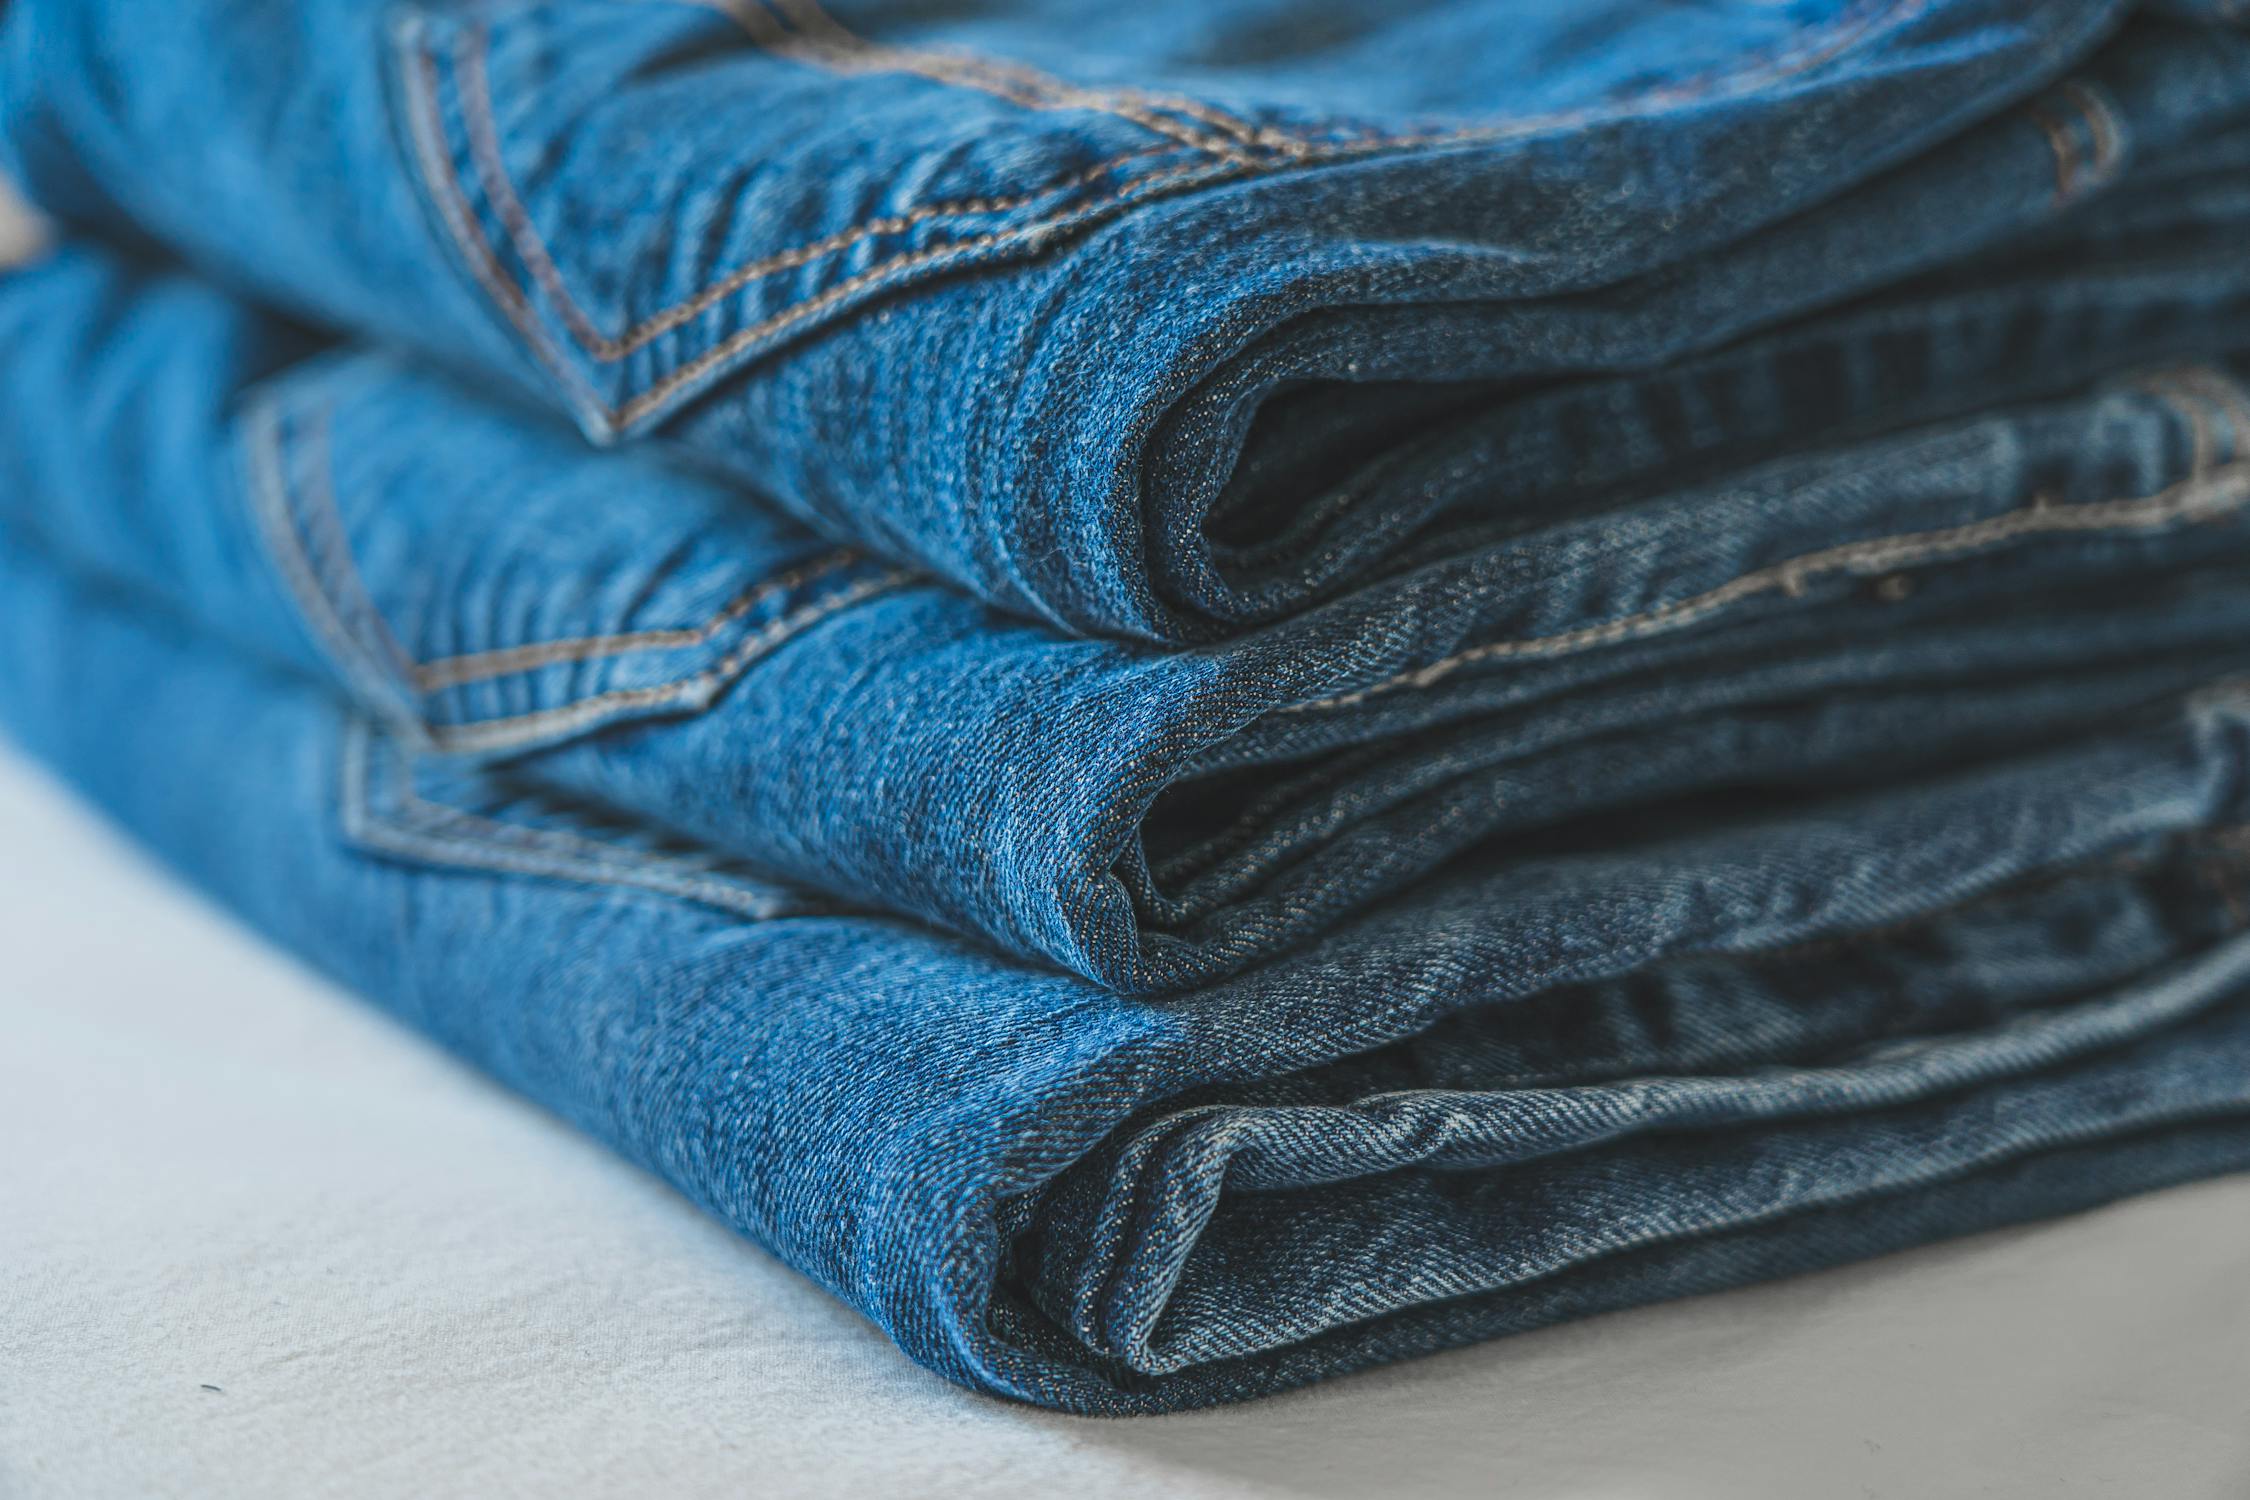 Blue Denim Pants on Table · Free Stock Photo